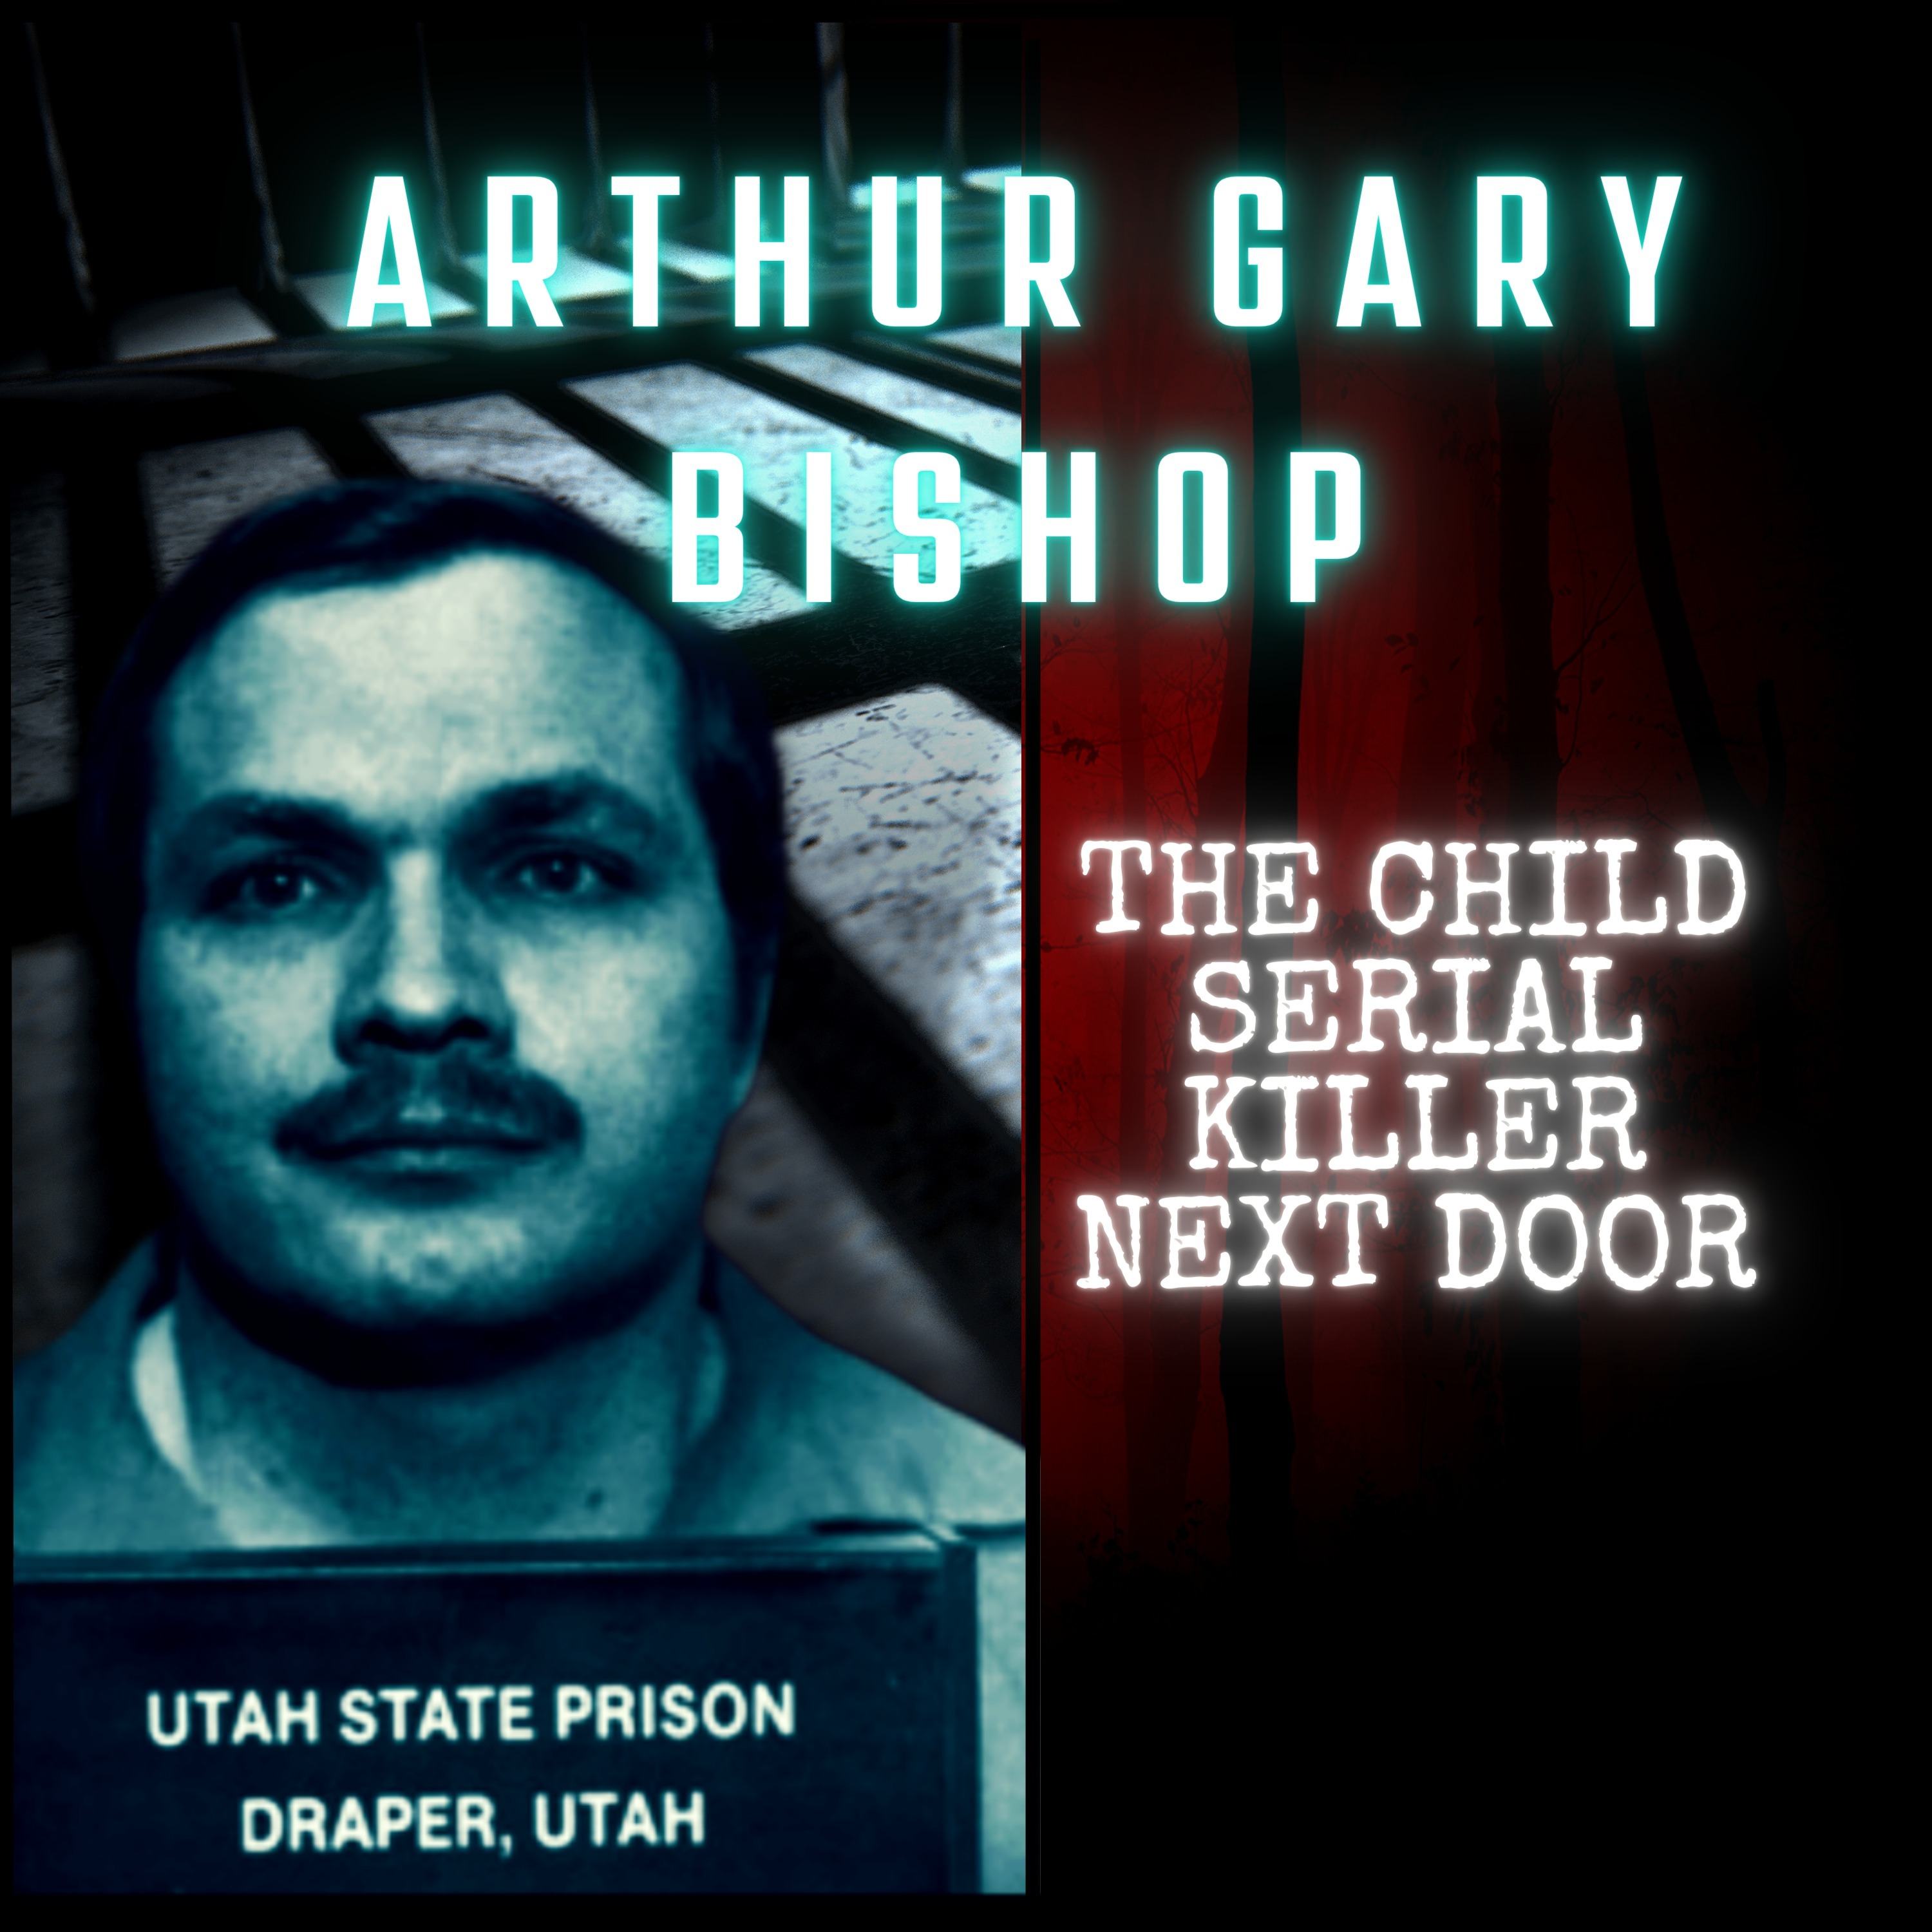 Arthur Gary Bishop l The Child Serial Killer Next Door Image